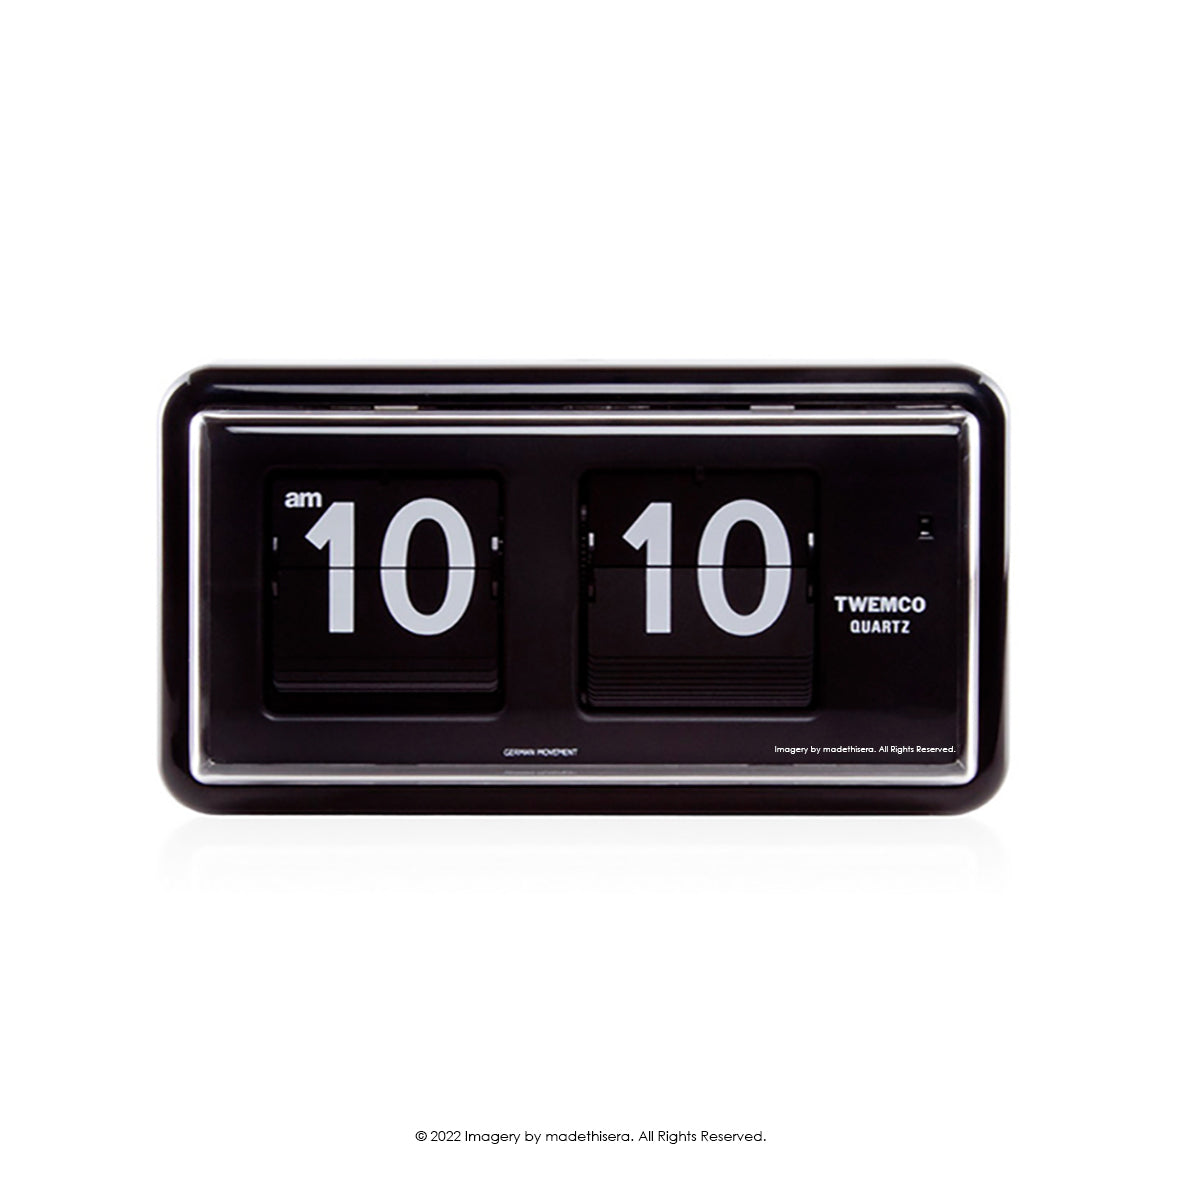 Twemco QT-30 Digital Flip Clock 數位翻頁鐘 (Black 黑色) (12HR 12小時制) [Table Clock/Wall Clock 座檯鐘/掛牆鐘]